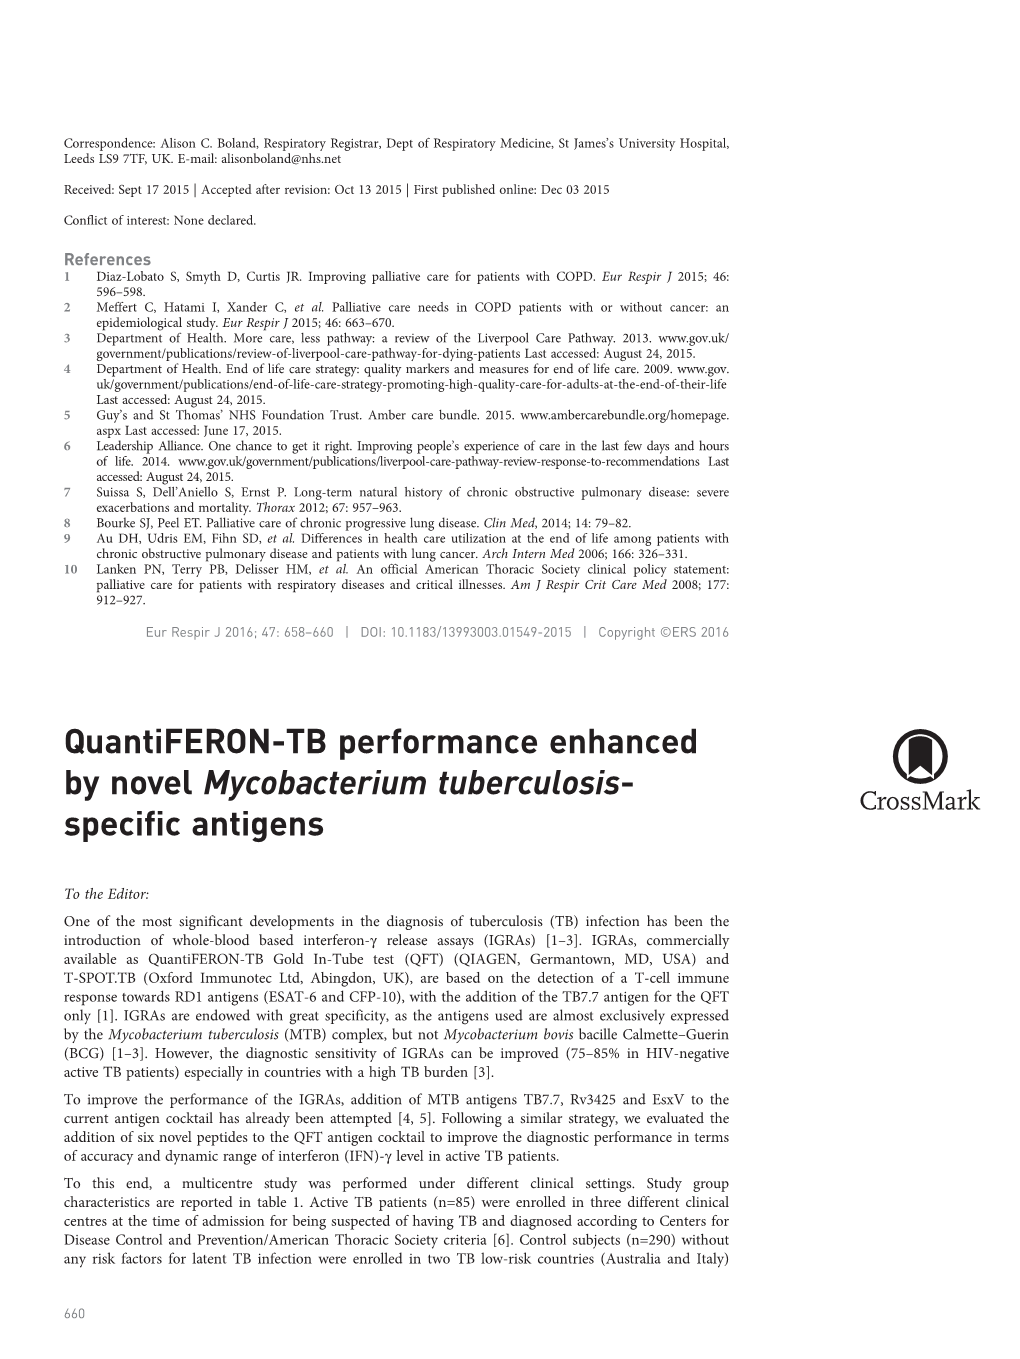 Quantiferon-TB Performance Enhanced by Novel Mycobacterium Tuberculosis- Specific Antigens